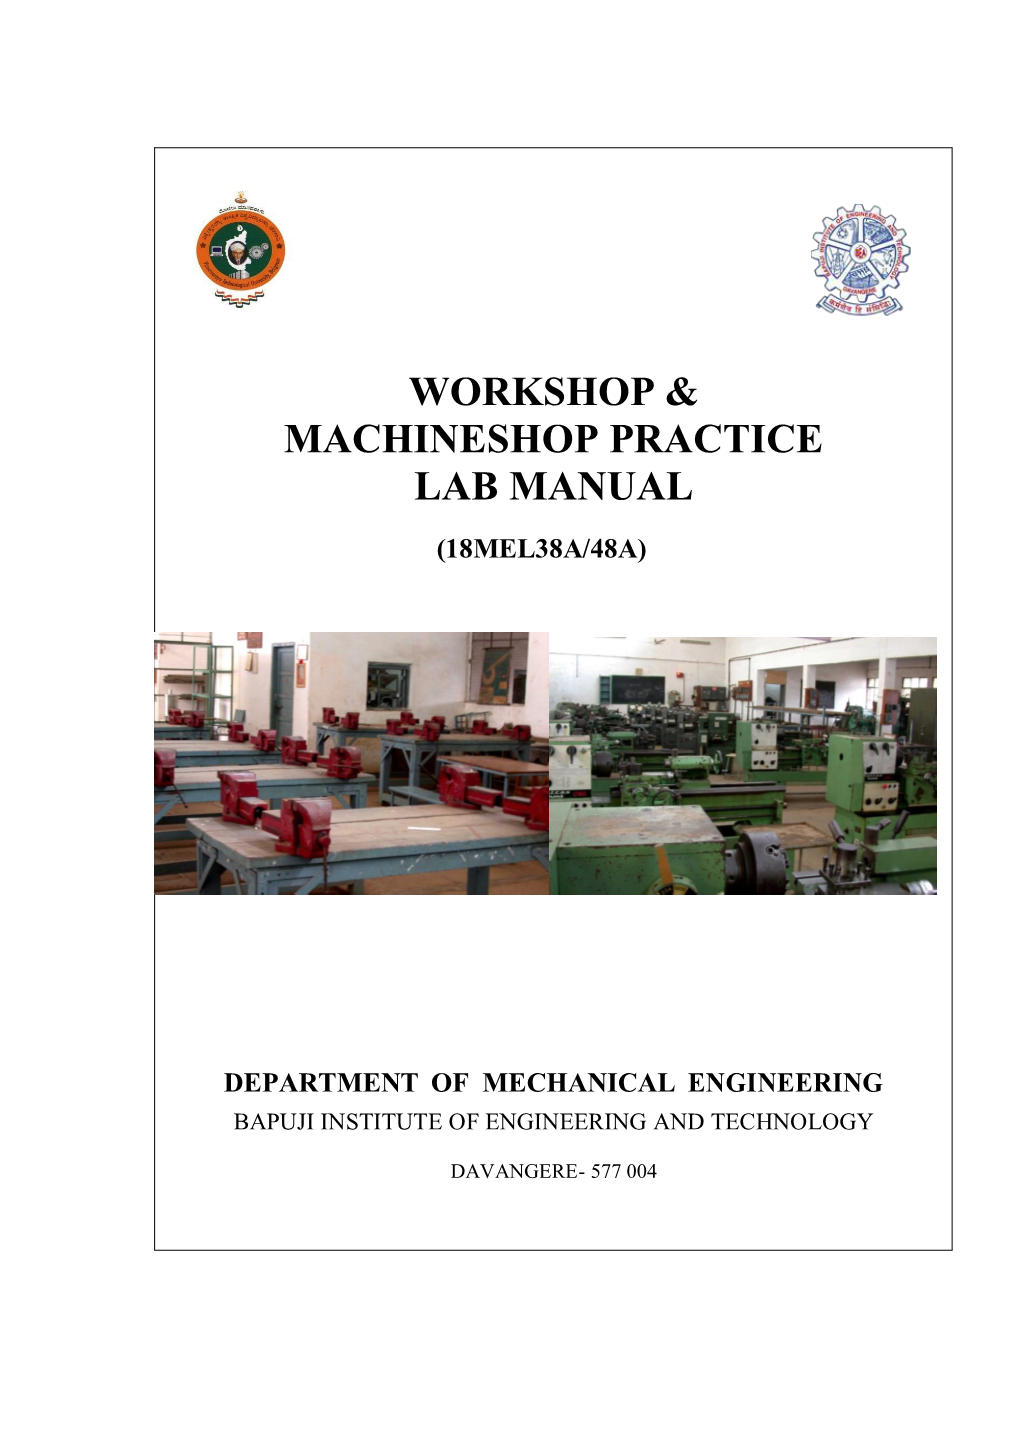 Workshop & Machineshop Practice Lab Manual